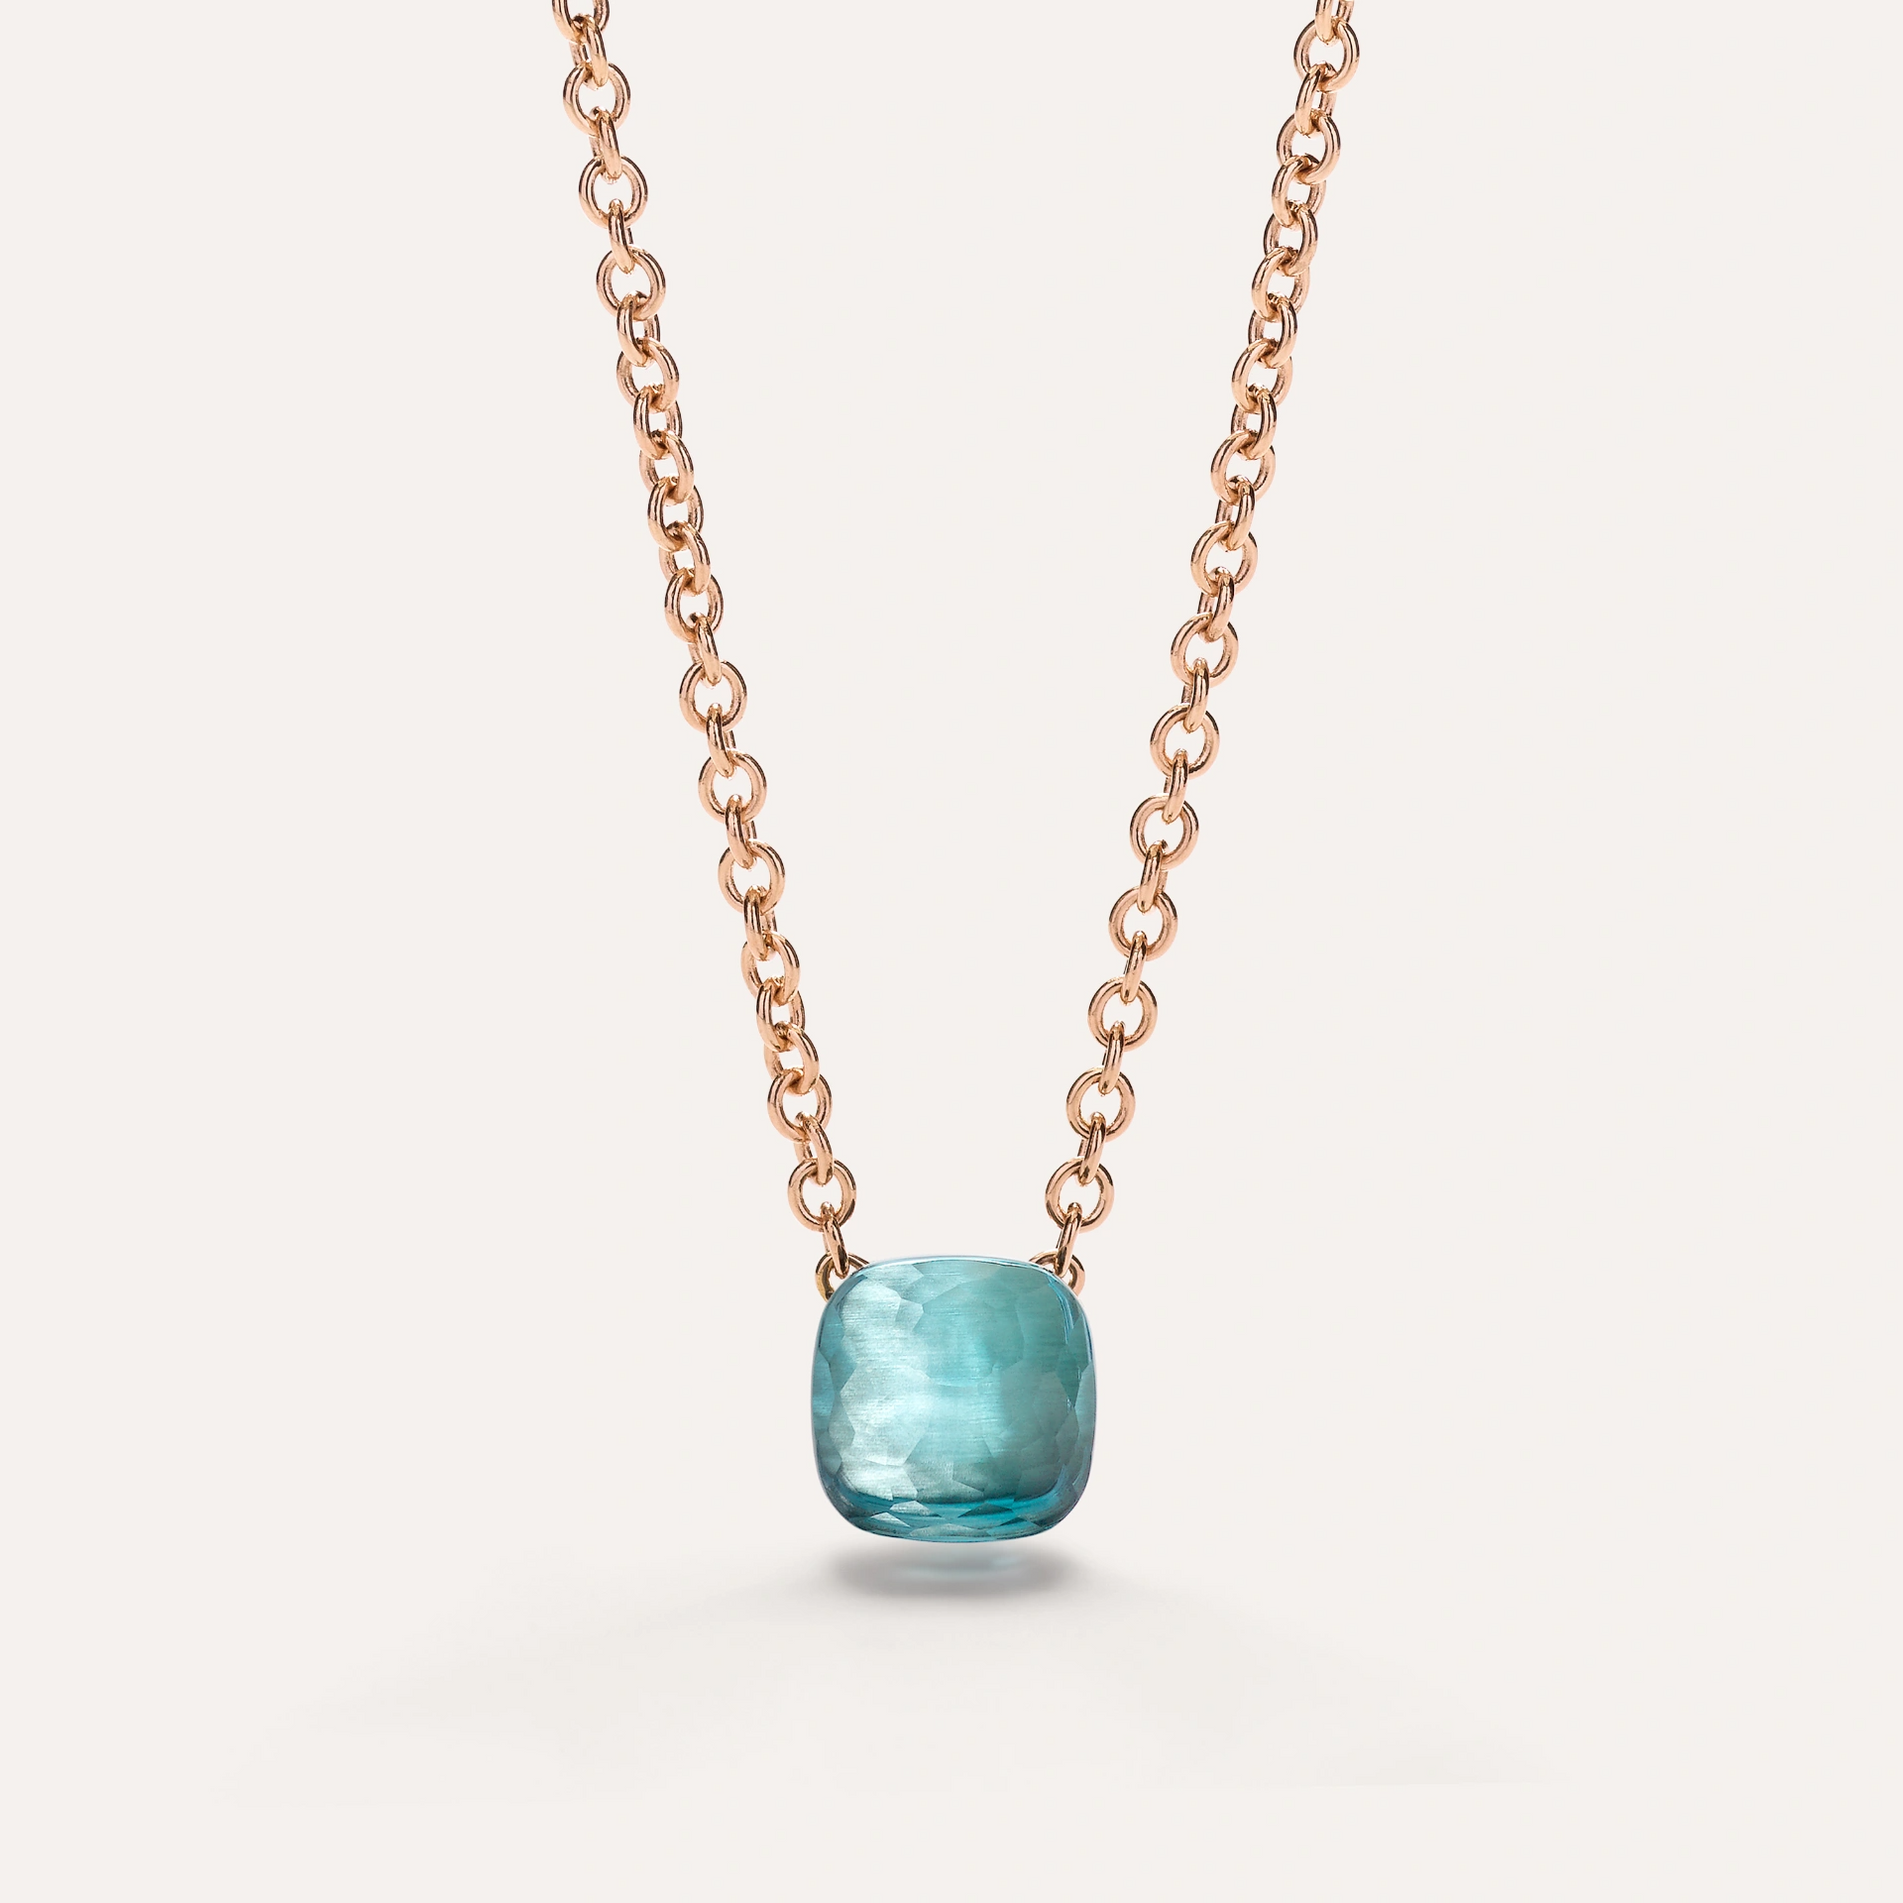 Pomellato Nudo Necklace with Petit Pendant, 18k Gold with Sky Blue Topaz - Orsini Jewellers